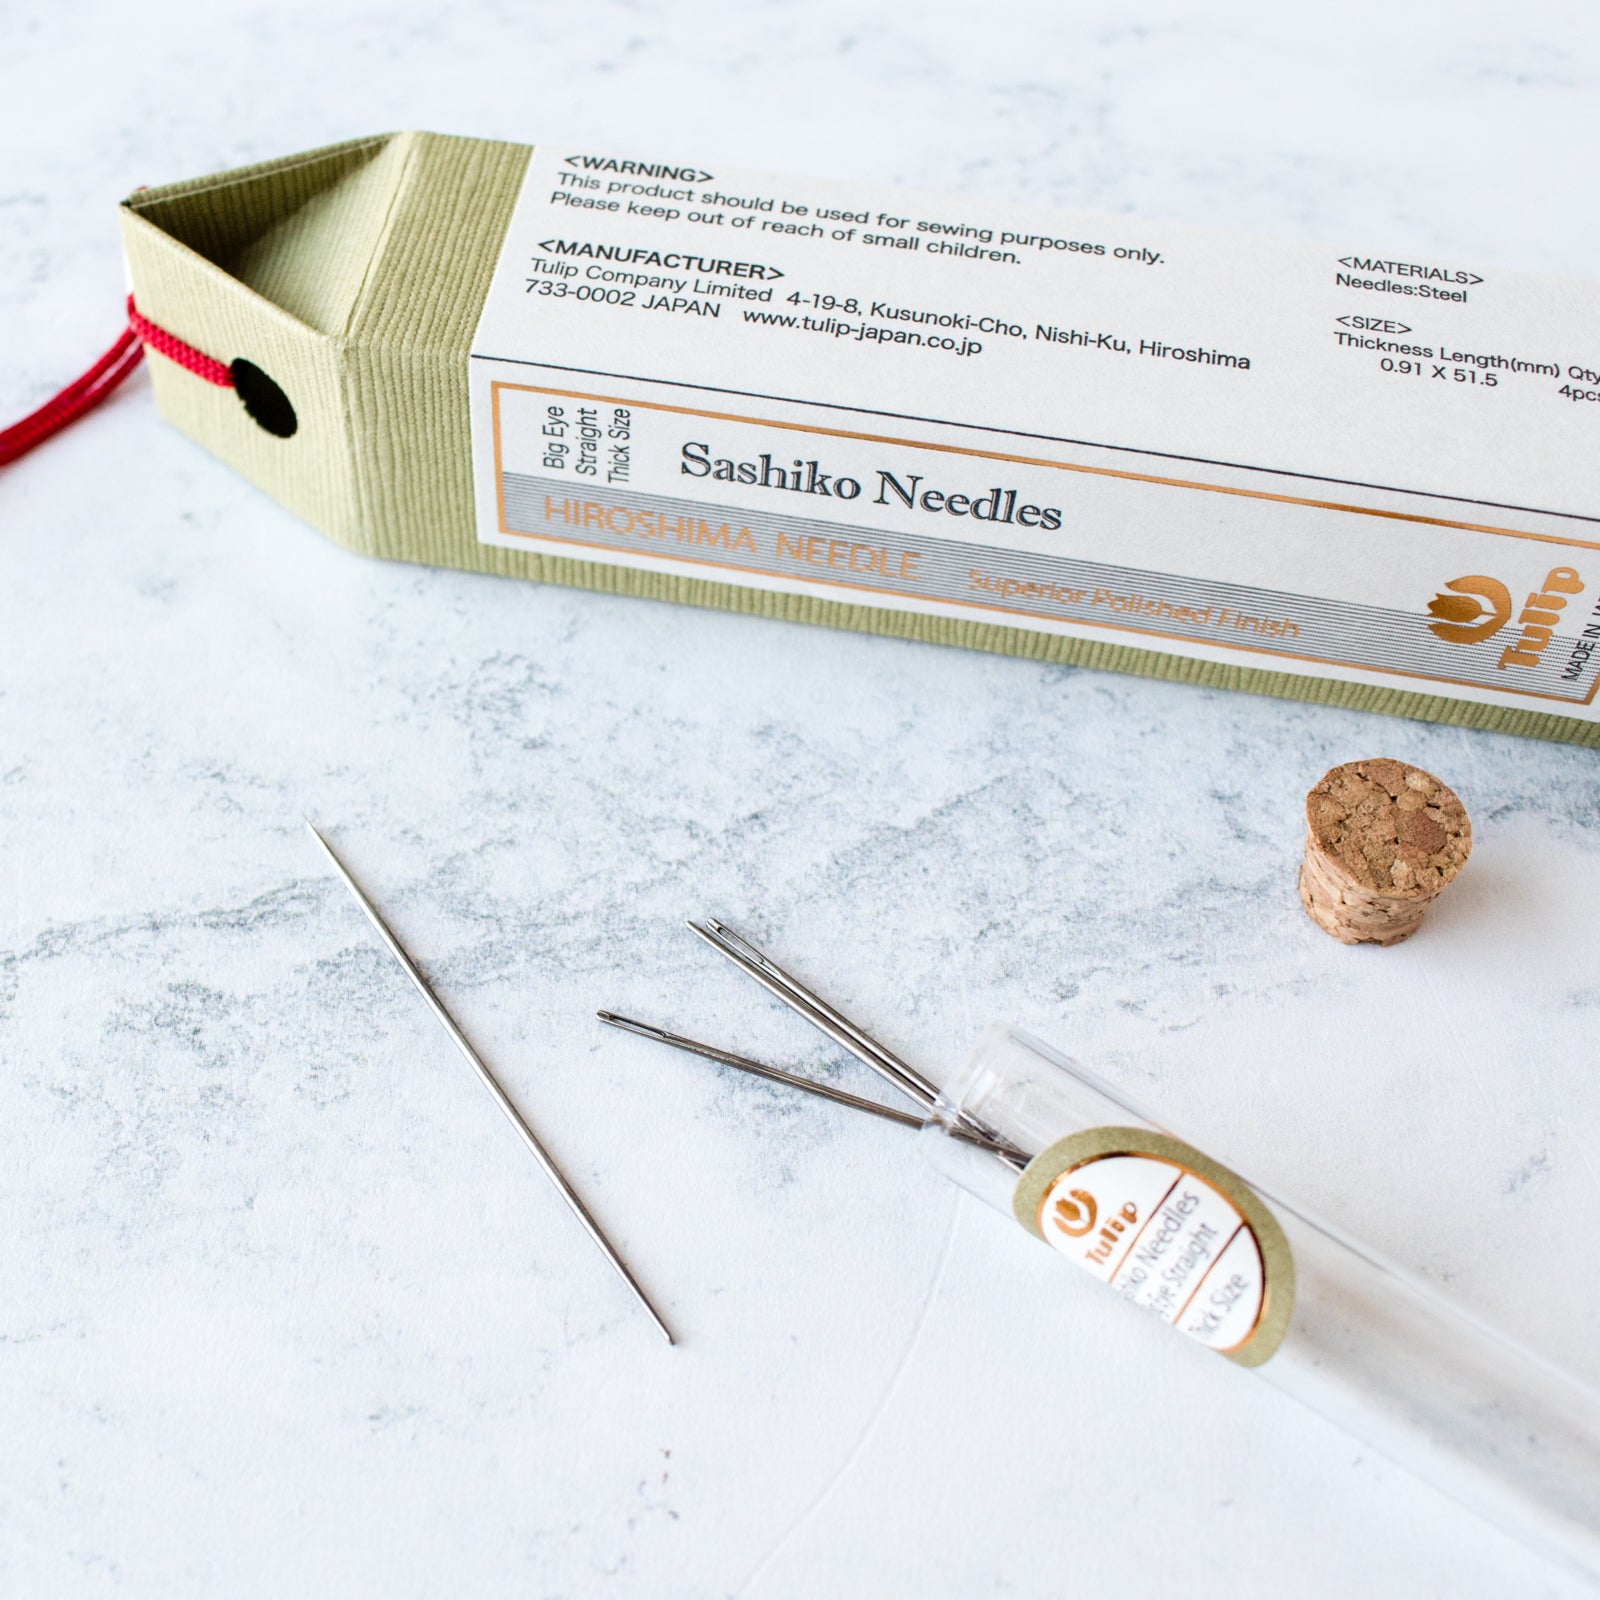 Sashiko Needles - A Threaded Needle